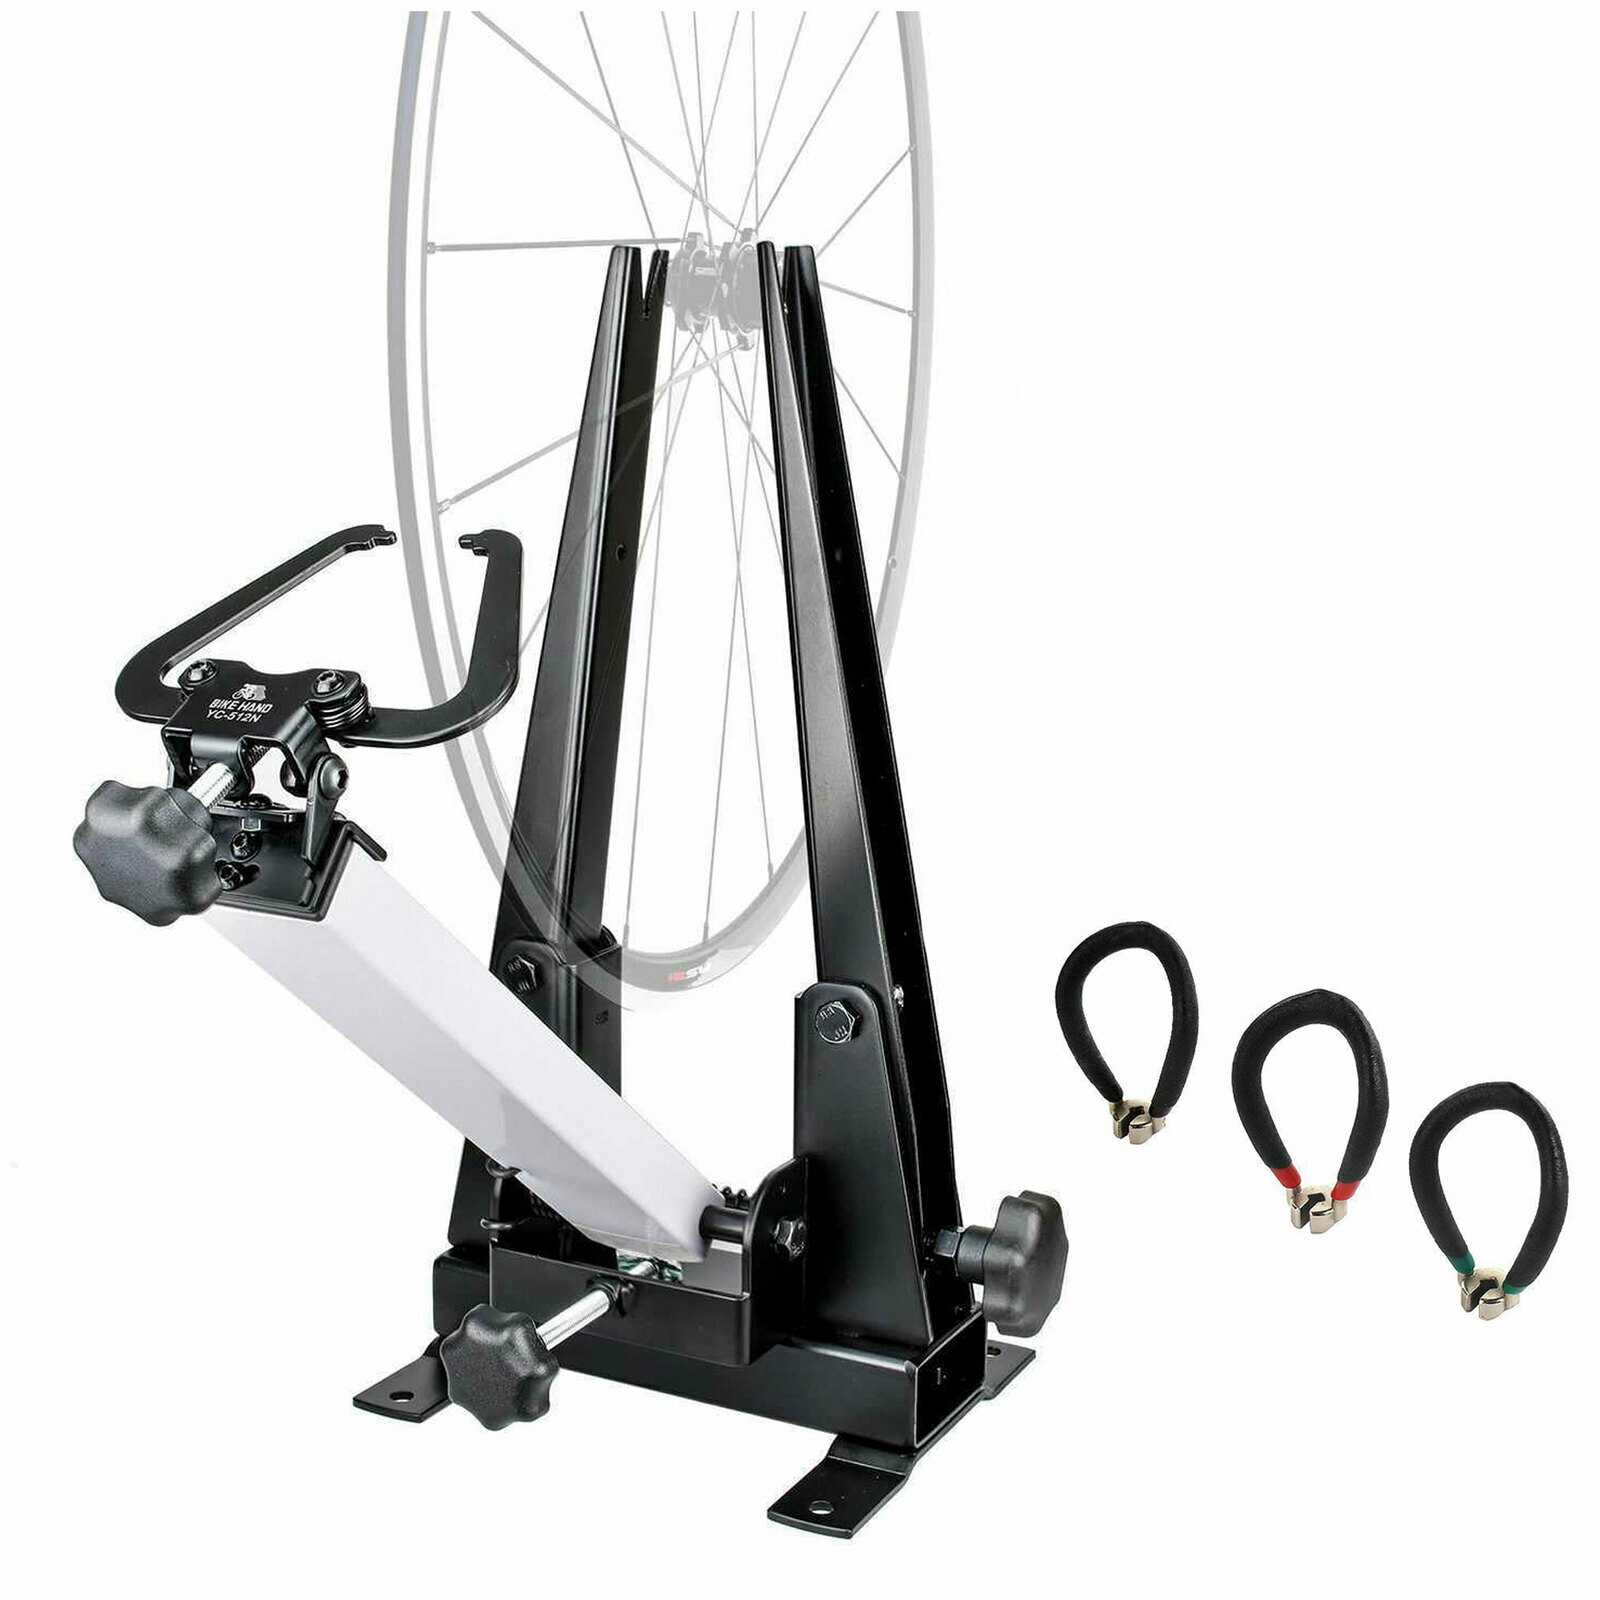 bicycle wheel truing tool